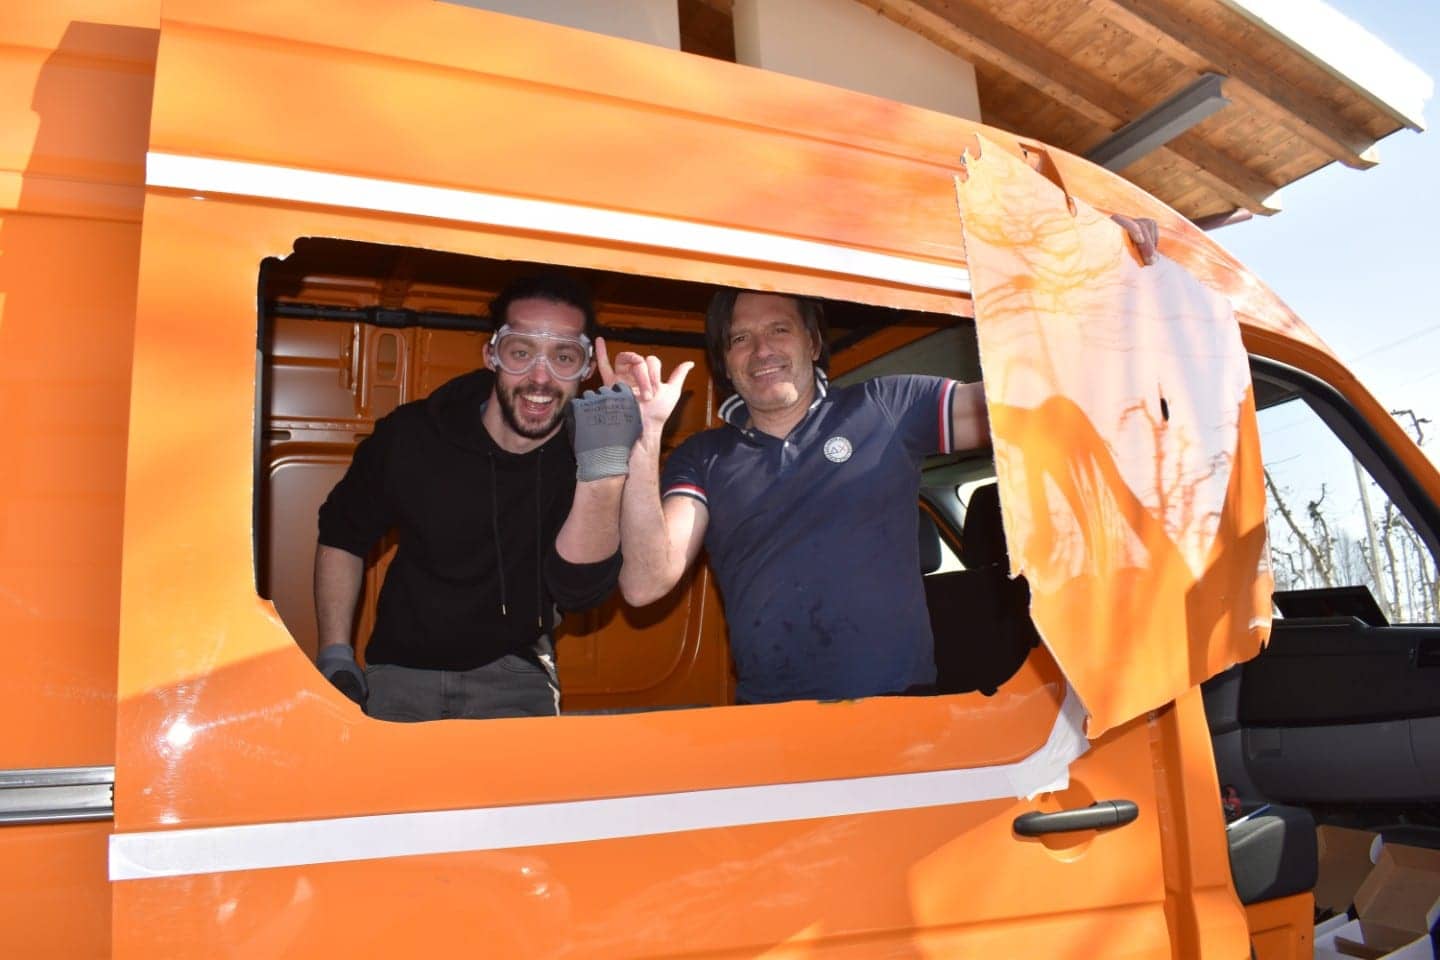 f aaa windows cut windows diy camper - how to camper a van